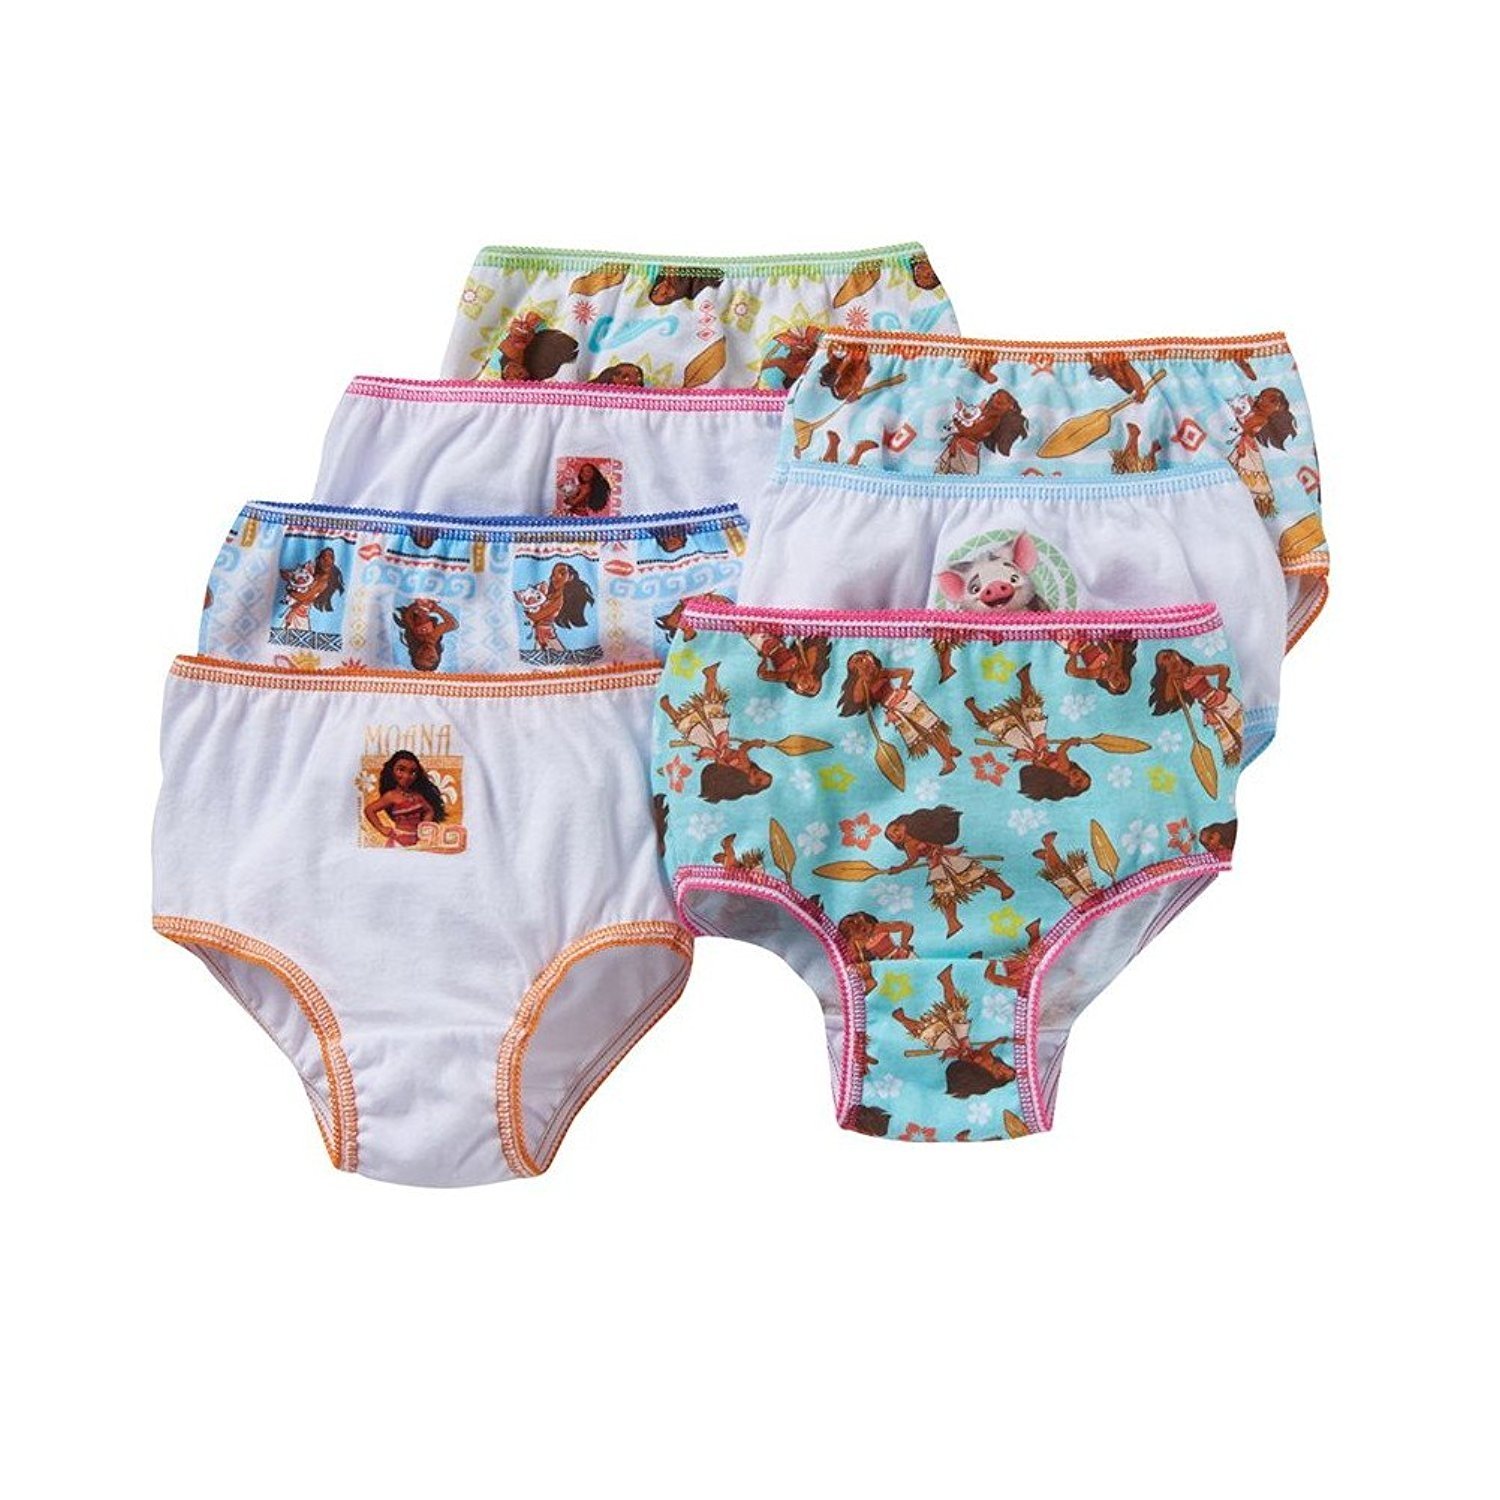 7 Pack Disney Moana Girls Cotton Panties Underwear Toddler (Size 2T/3T) NWOT